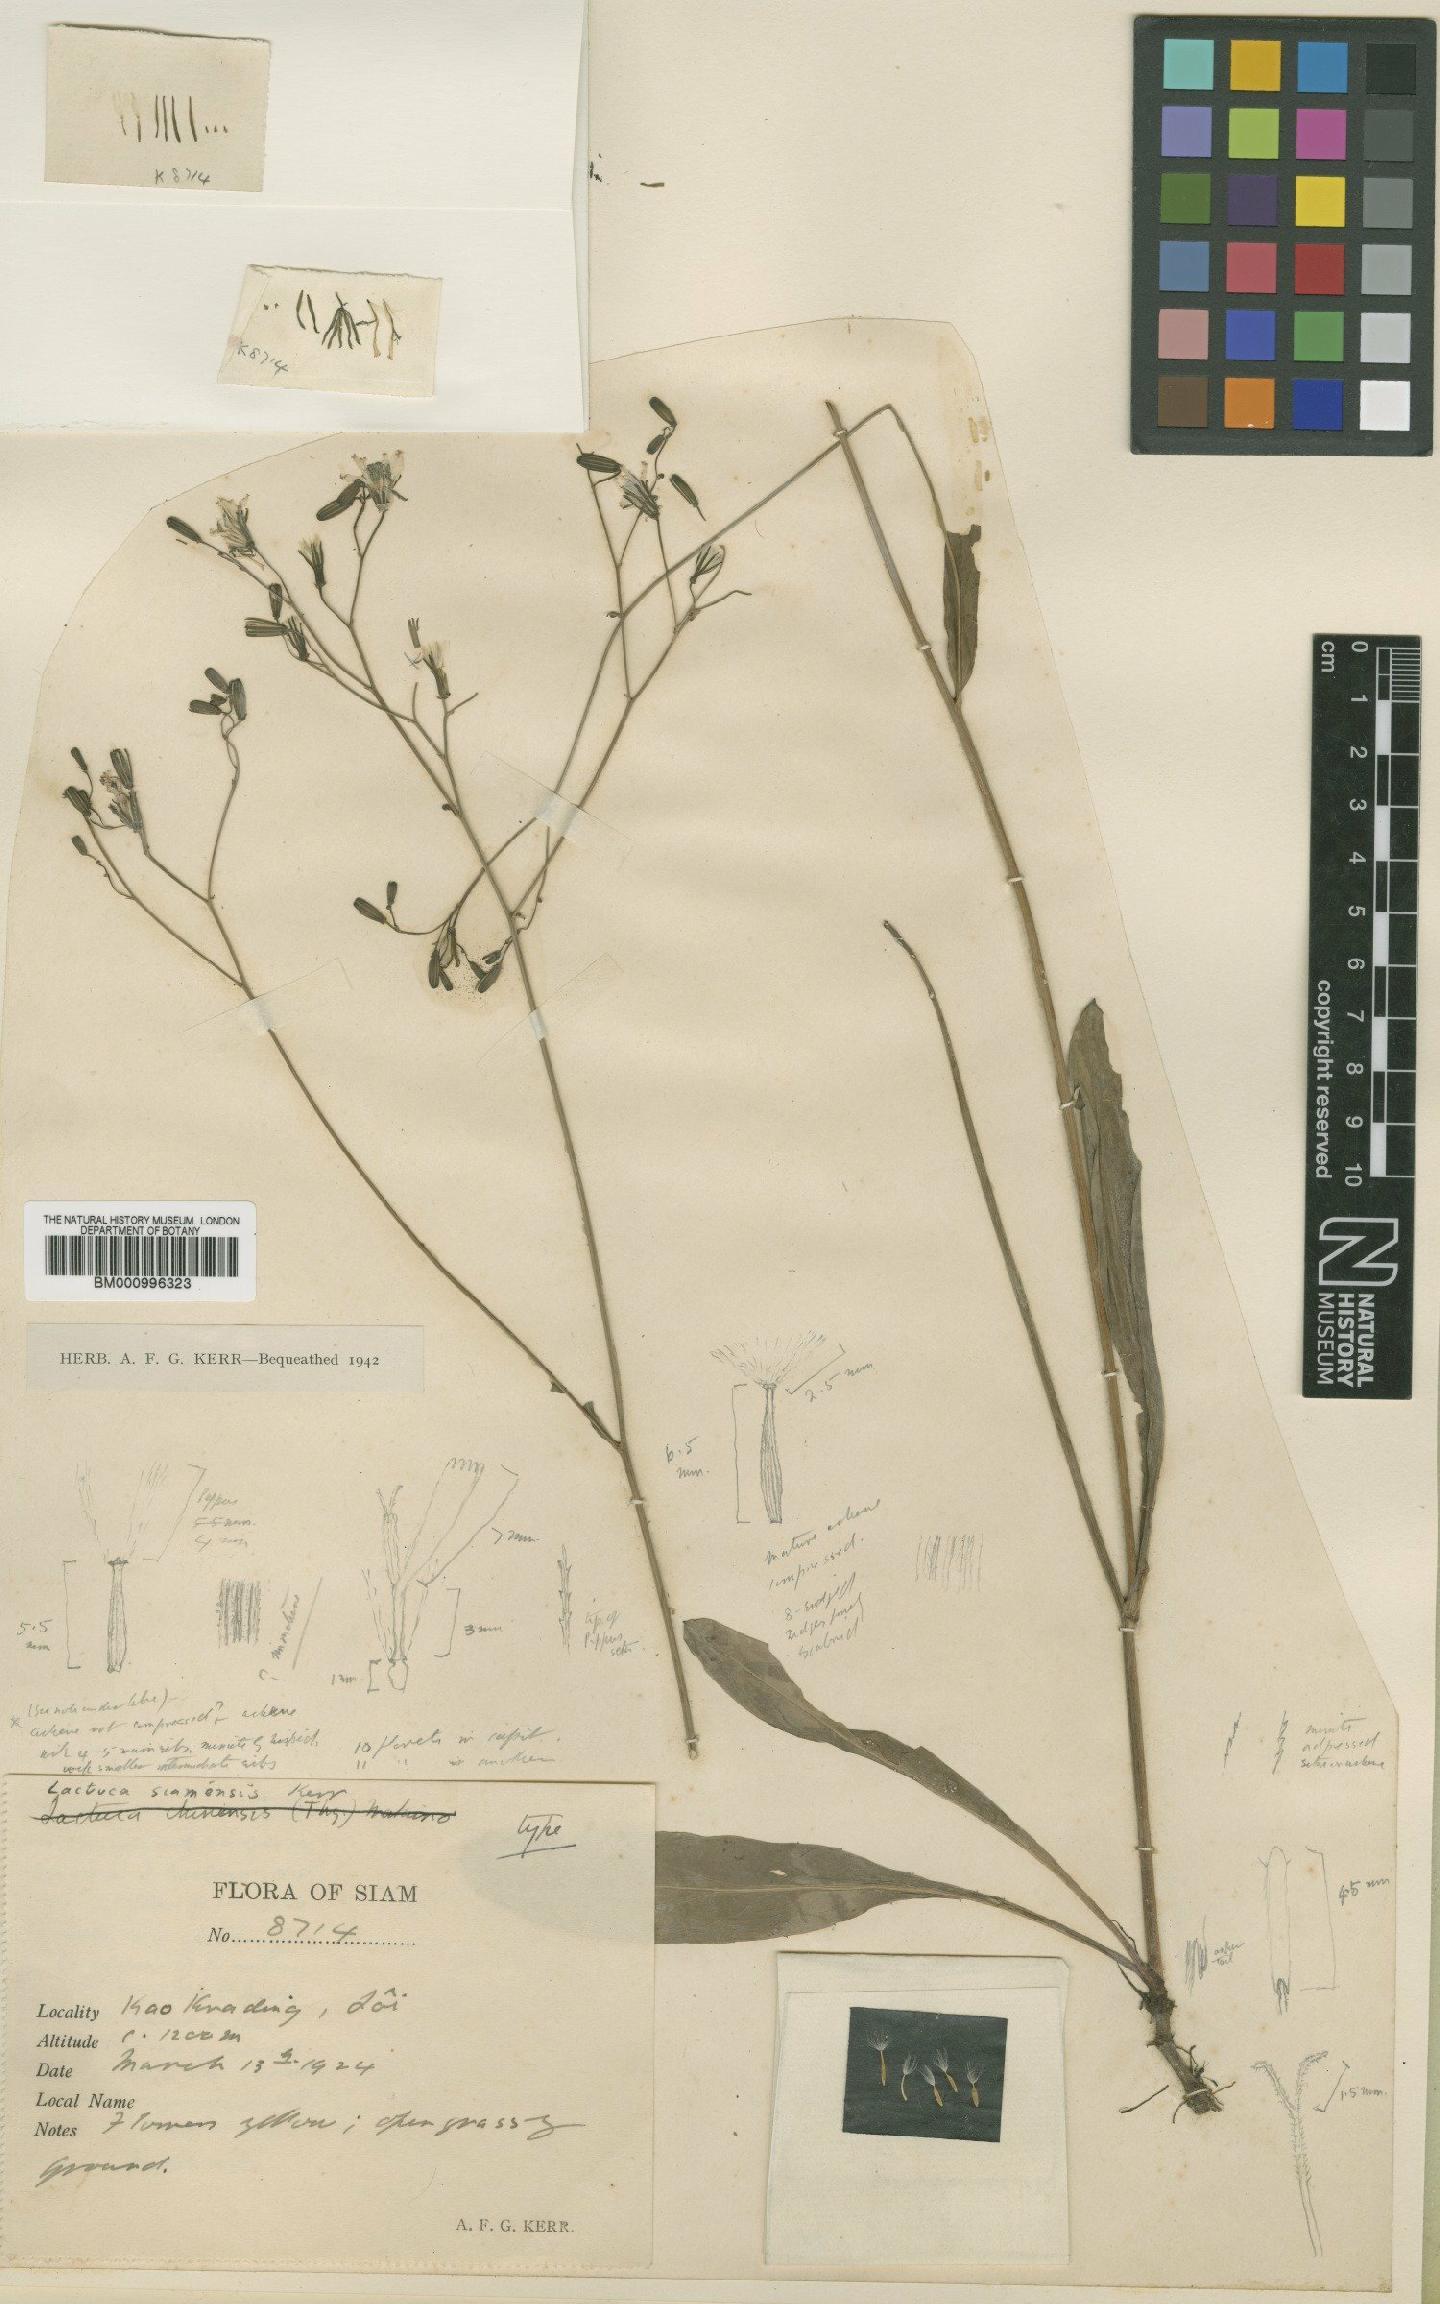 To NHMUK collection (Lactuca siamensis Kerr; Type; NHMUK:ecatalogue:481818)